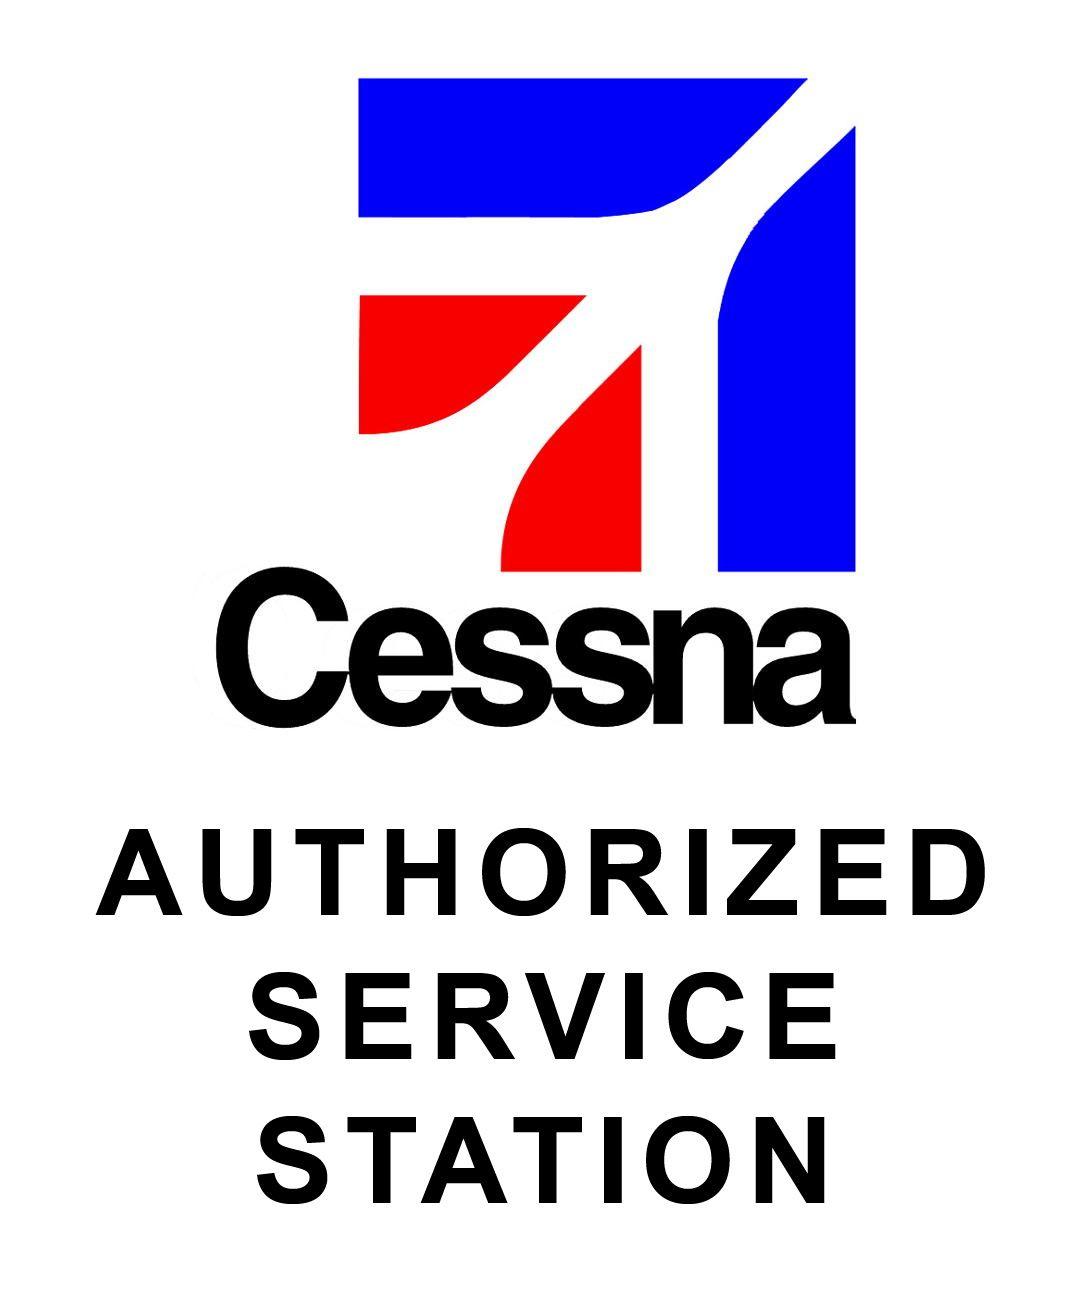 Cessna Logo - Image result for cessna logo | Arts/Ads & Logos Part 1 | Marques de luxe